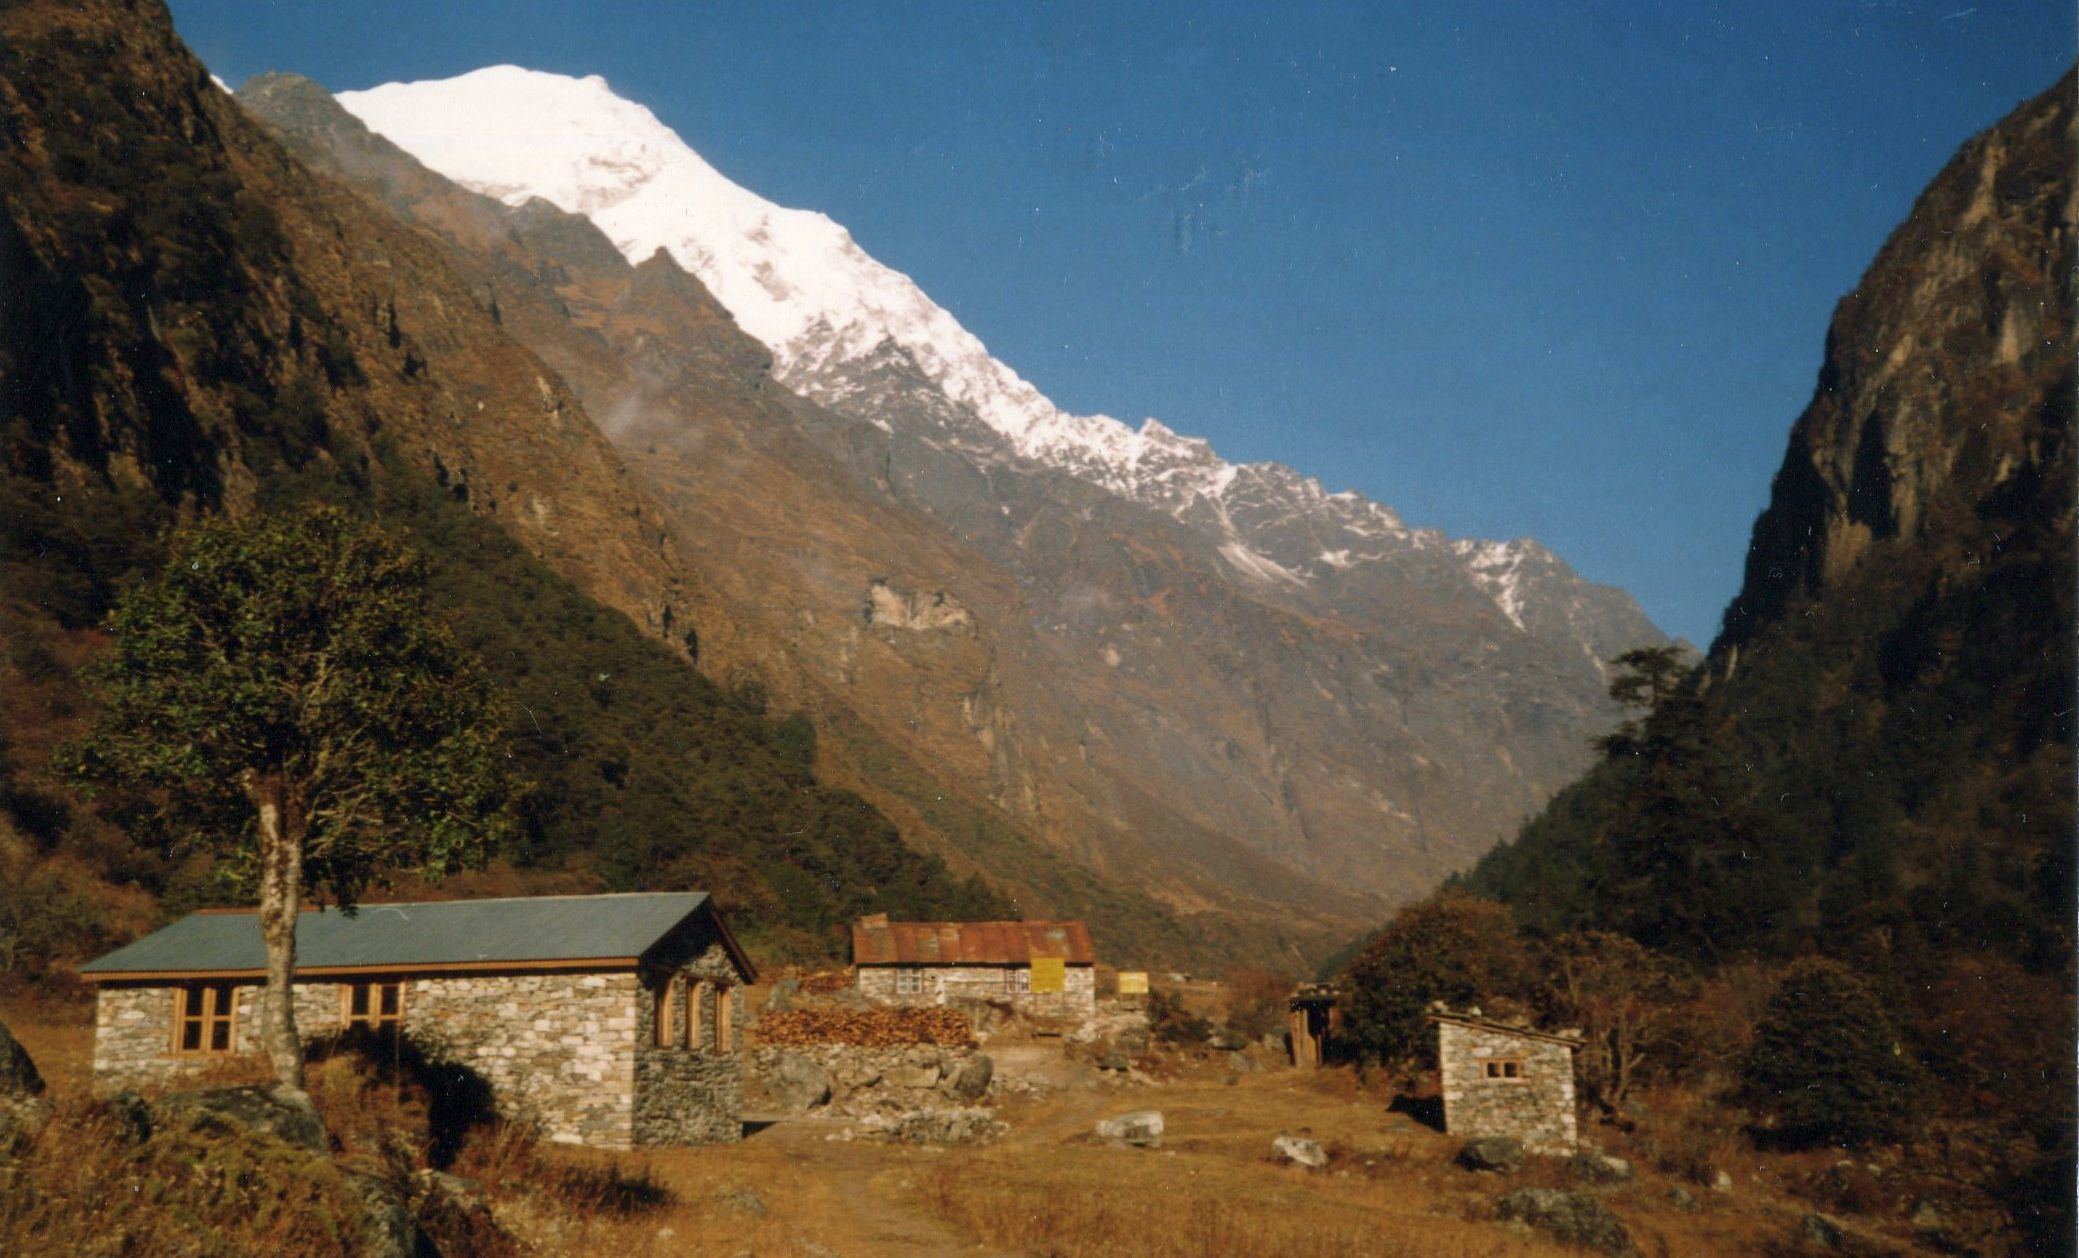 Langtang Valley of the Nepal Himalaya